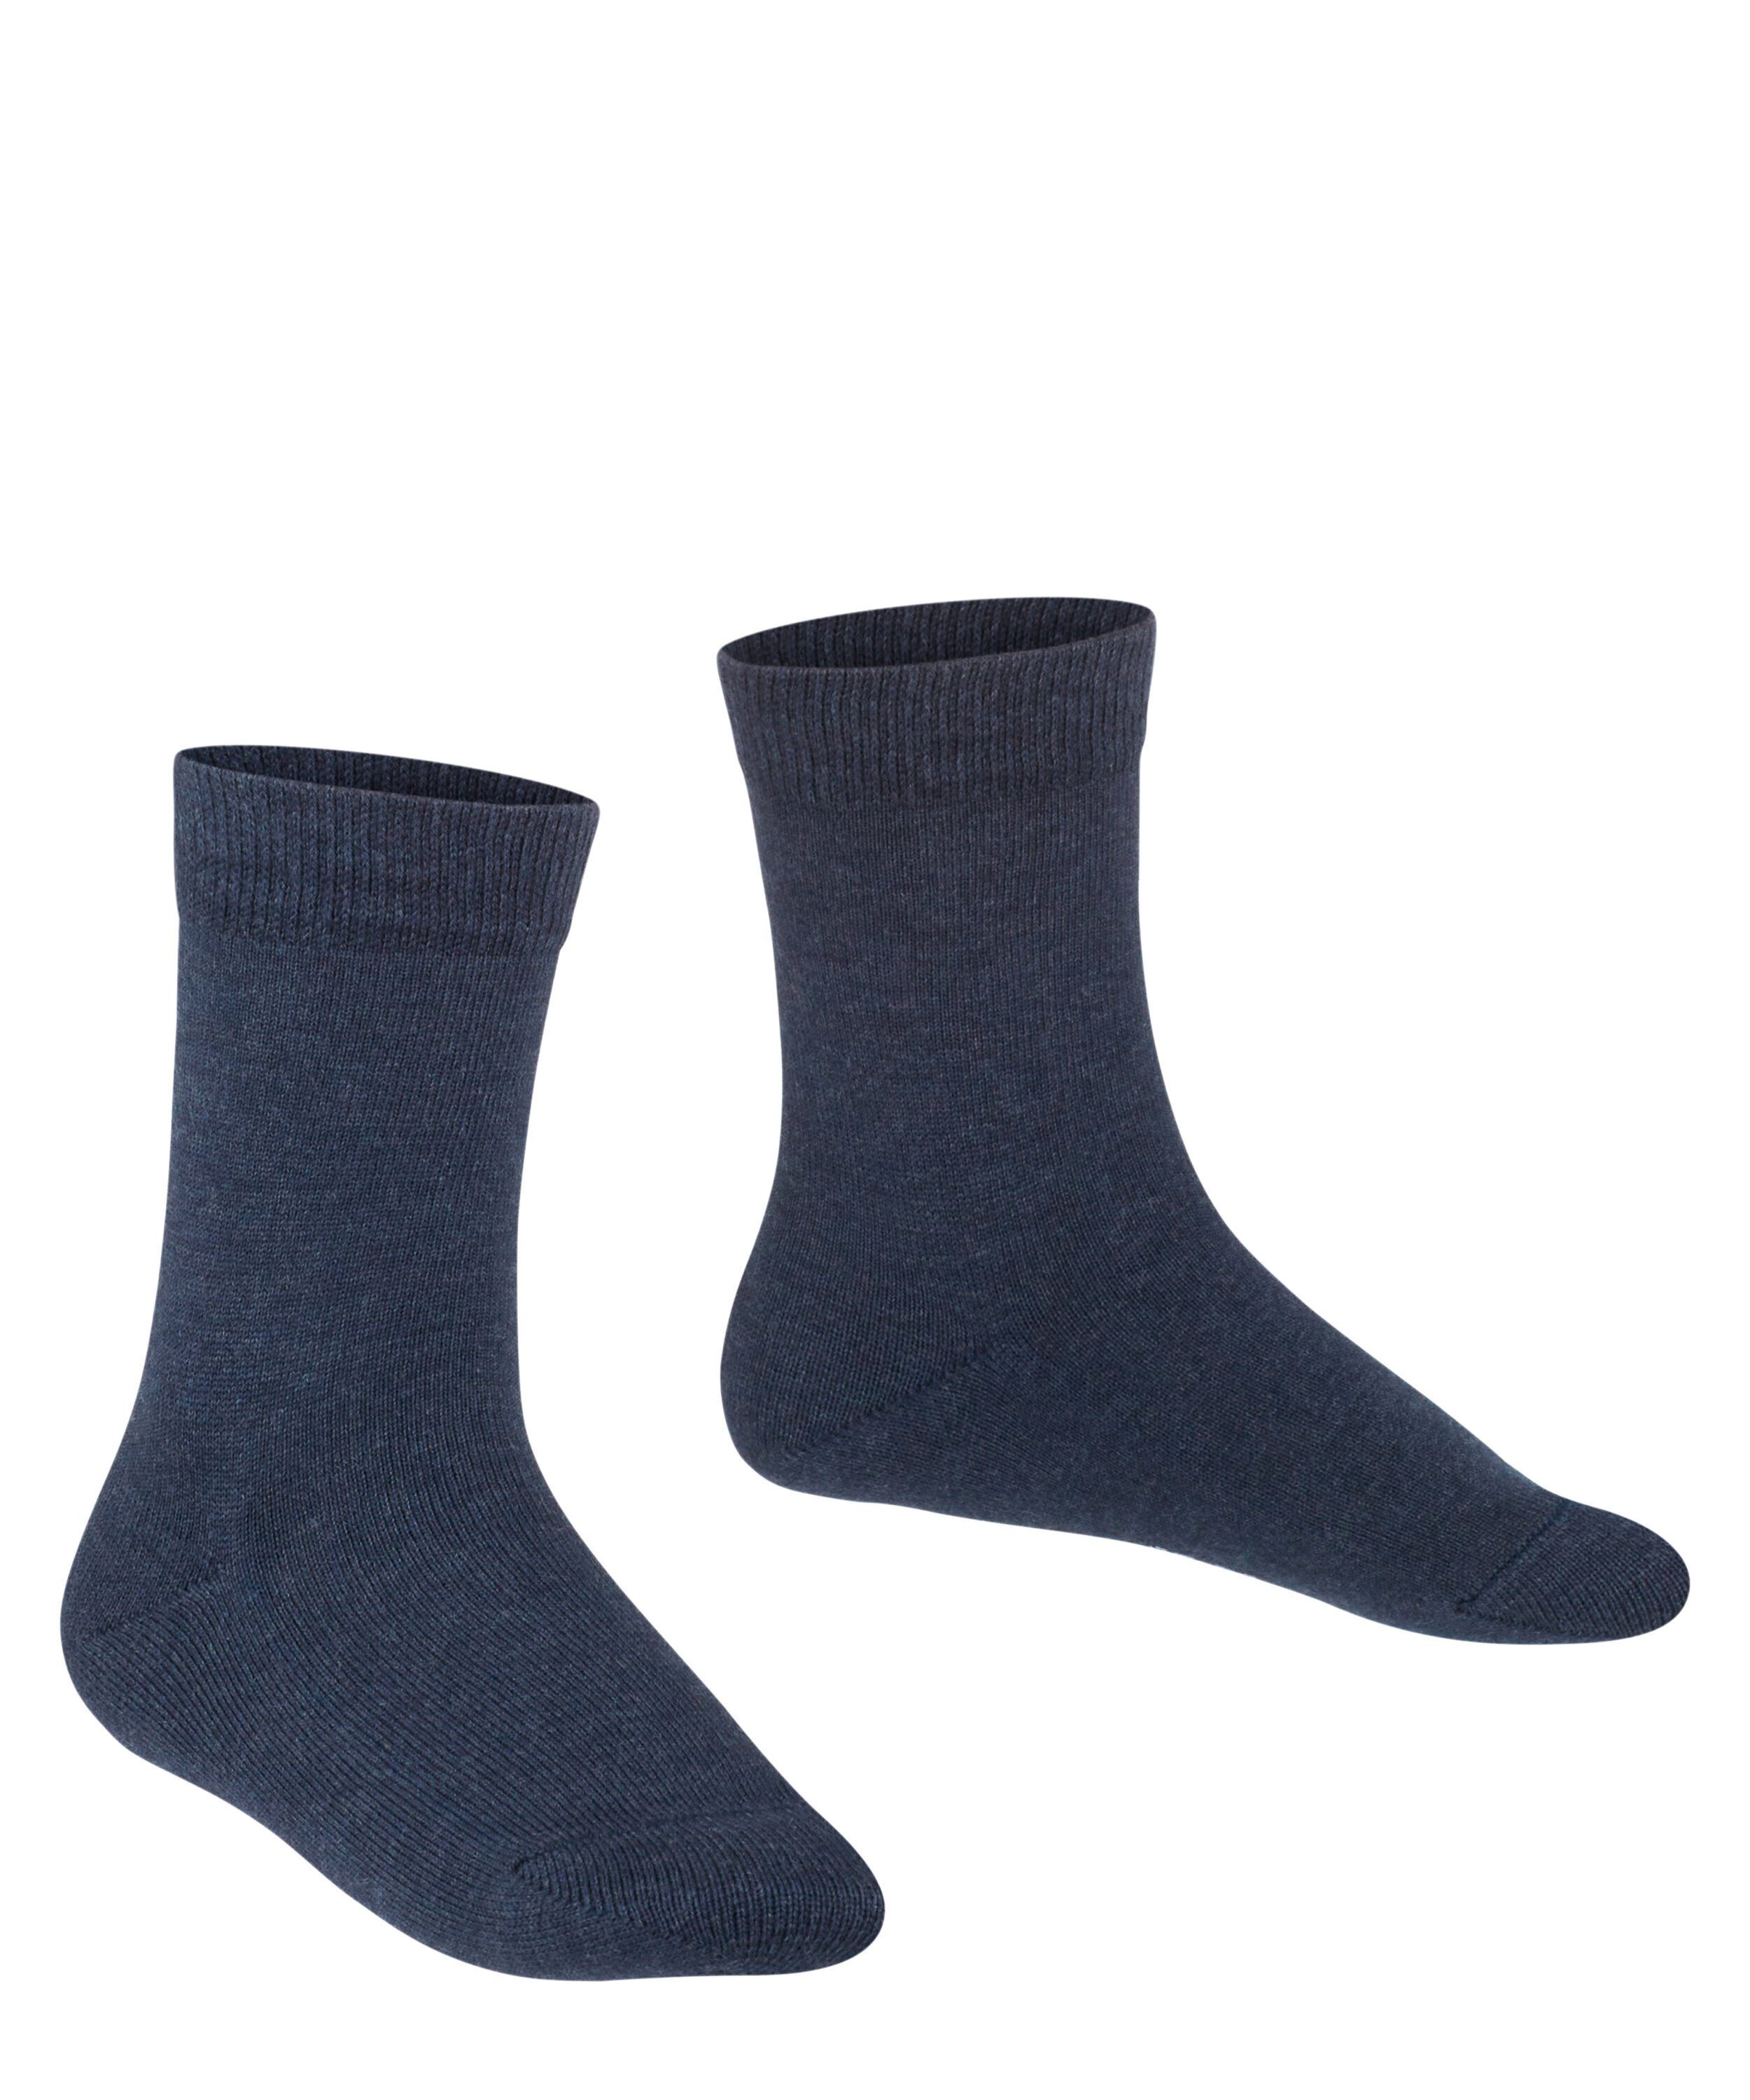 Family (6490) (1-Paar) Socken FALKE navyblue m